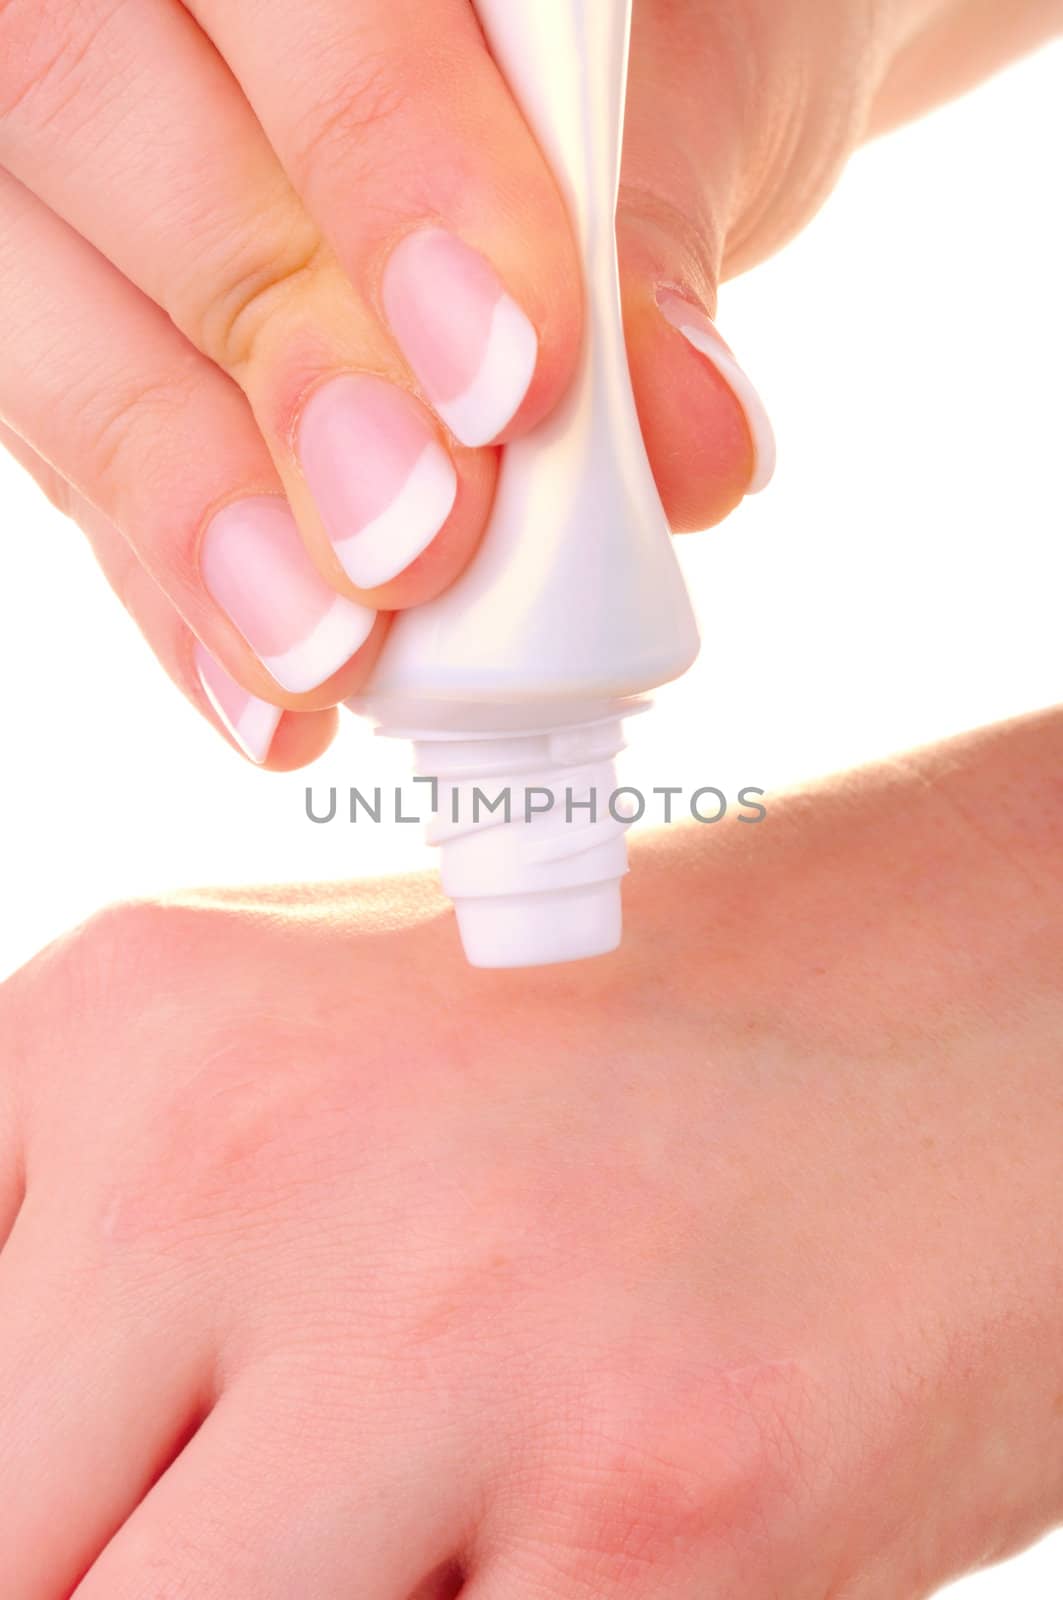 Cream applying on hands by iryna_rasko